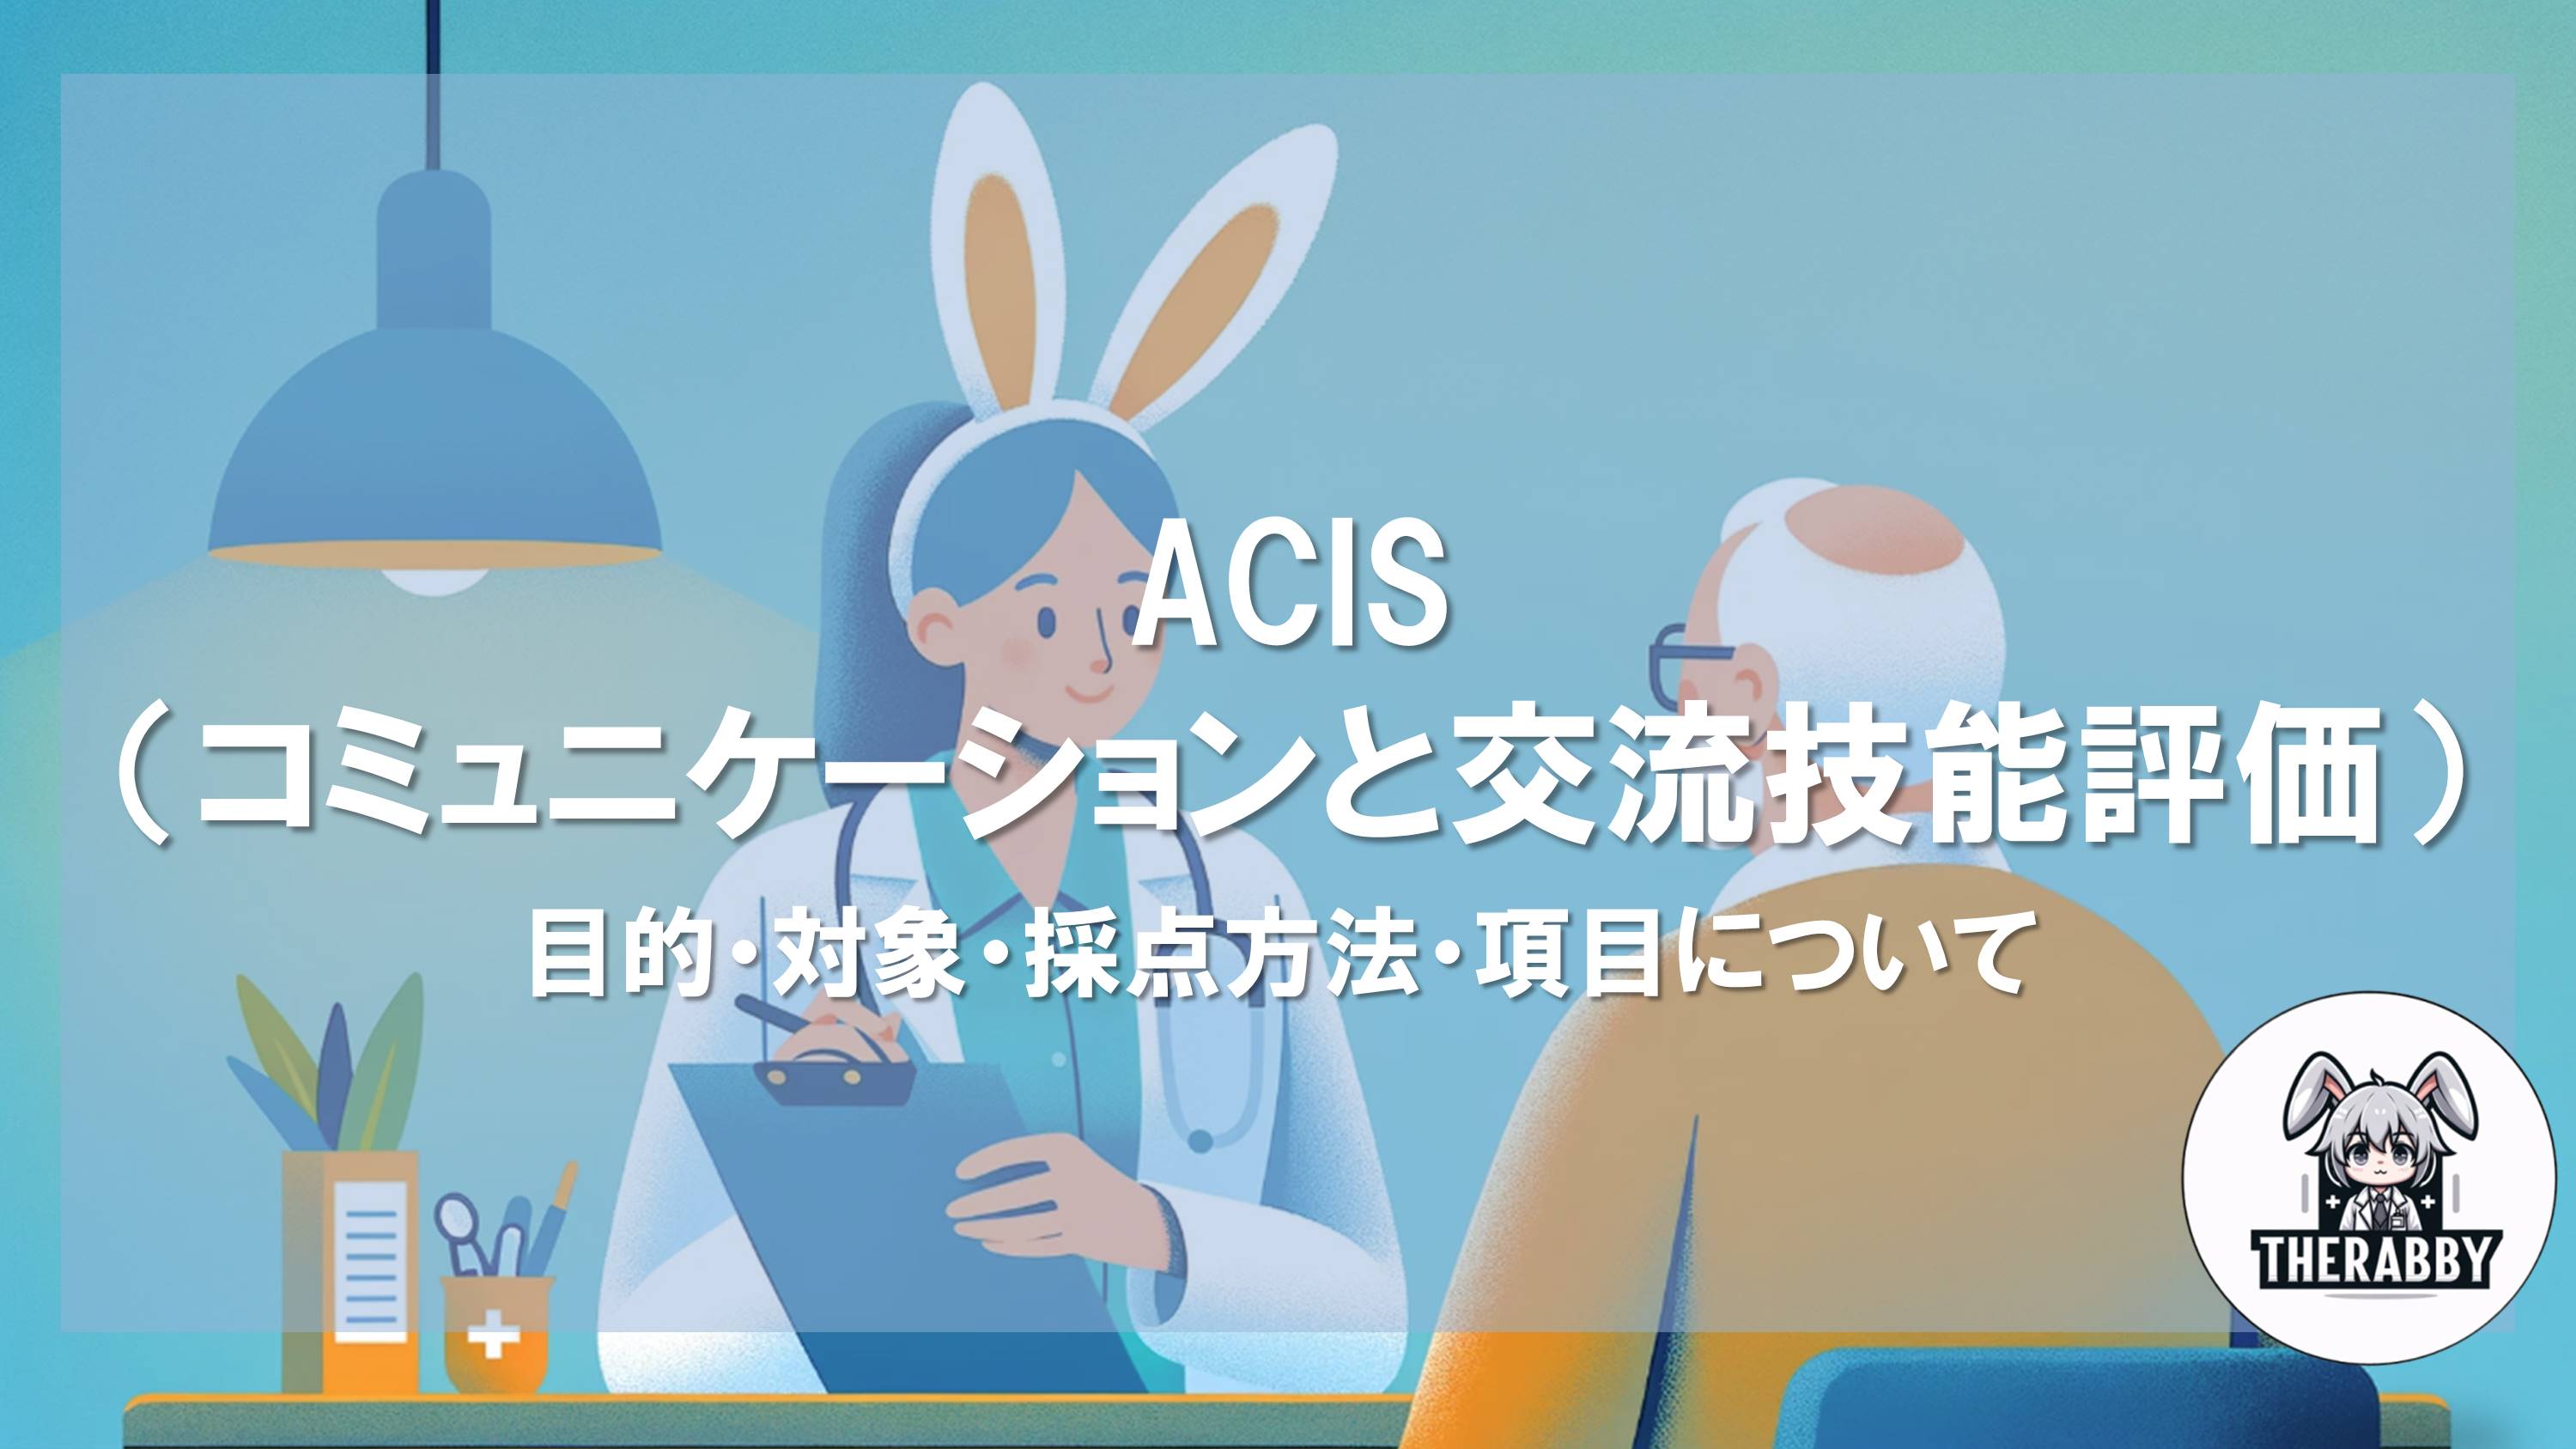 ACIS（コミュニケーションと交流技能評価）- 目的・対象・採点方法・項目について